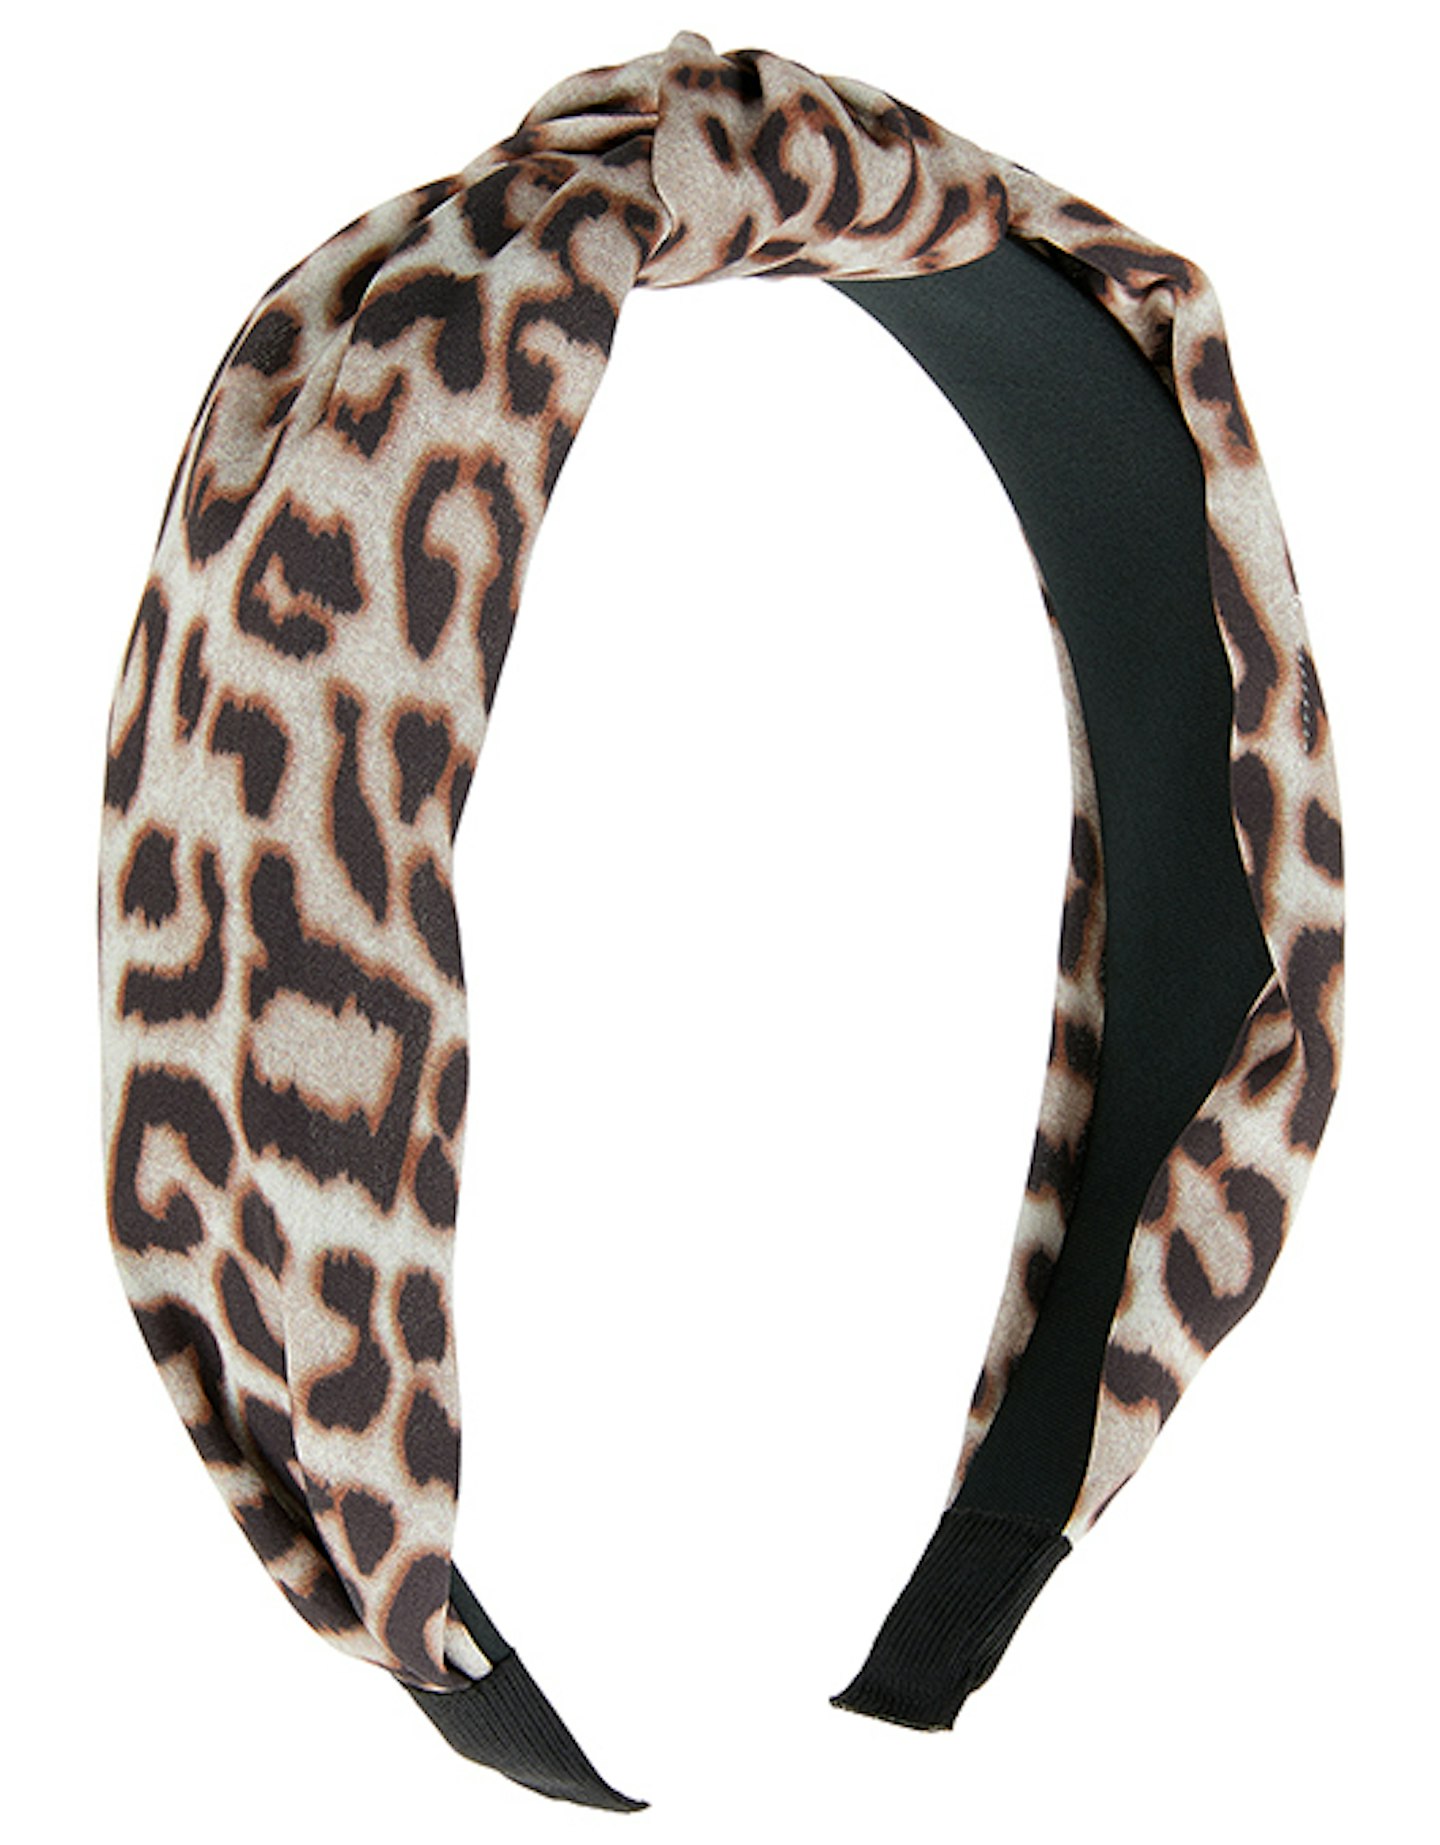 Accessorize, Leopard Print headband, £9.00